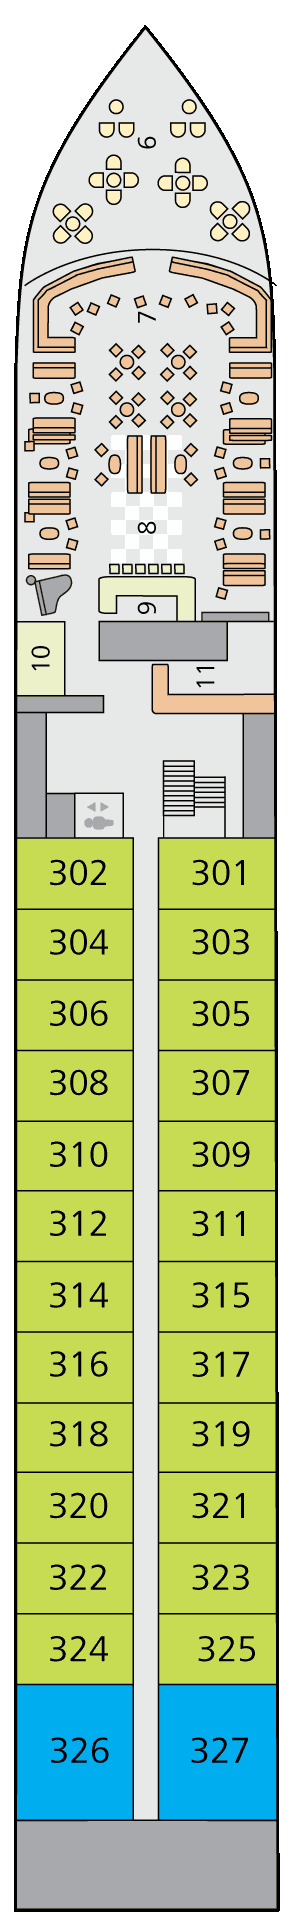 Deck 3 (Deck Nr. 3)